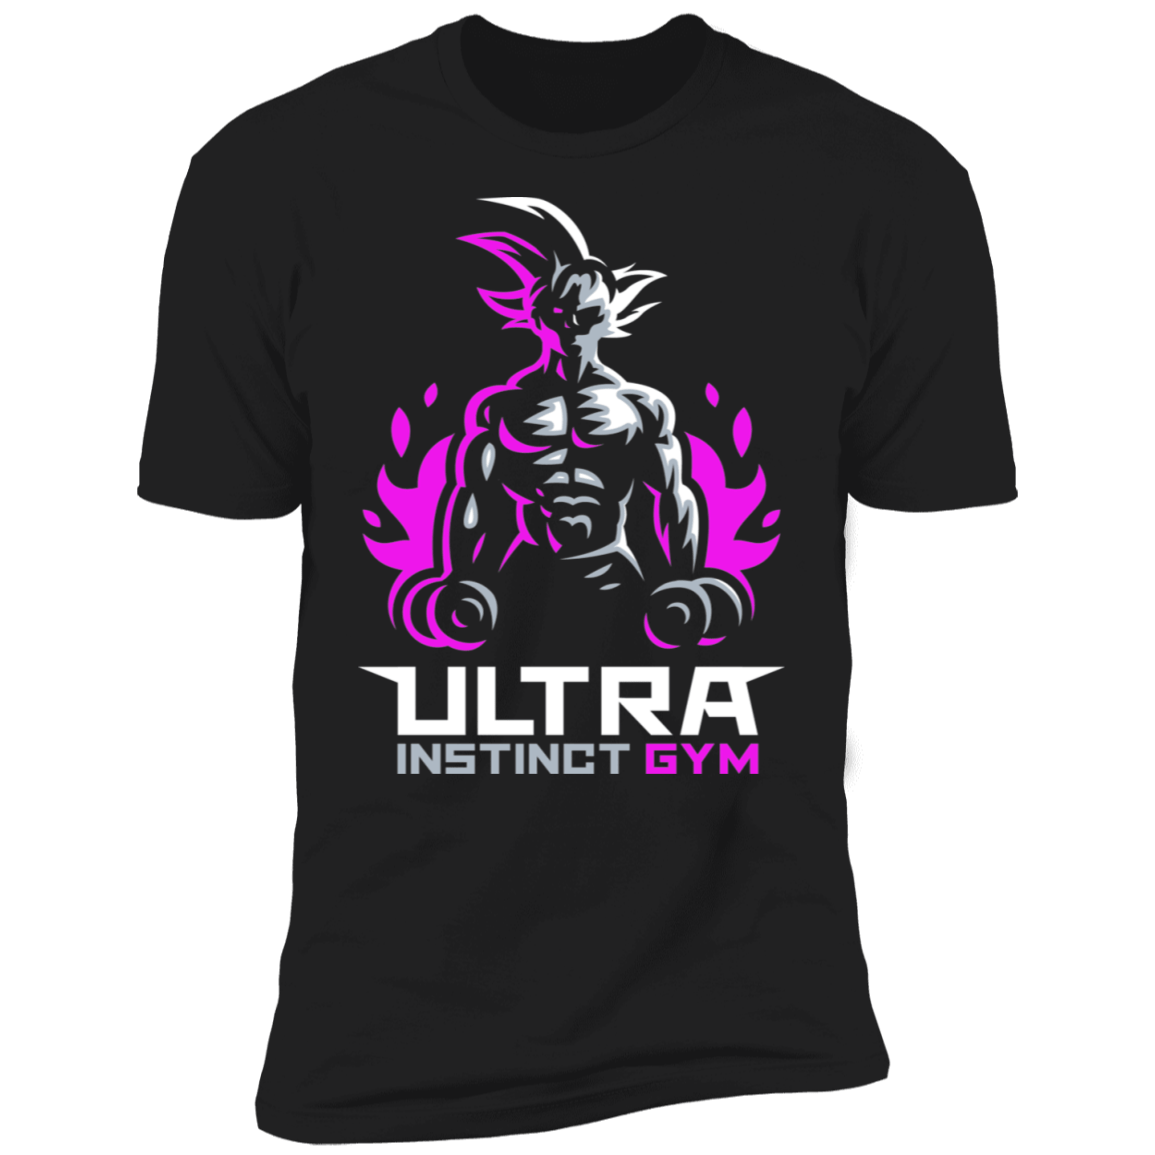 Ultra Instinct Gym Men's Premium T-Shirt